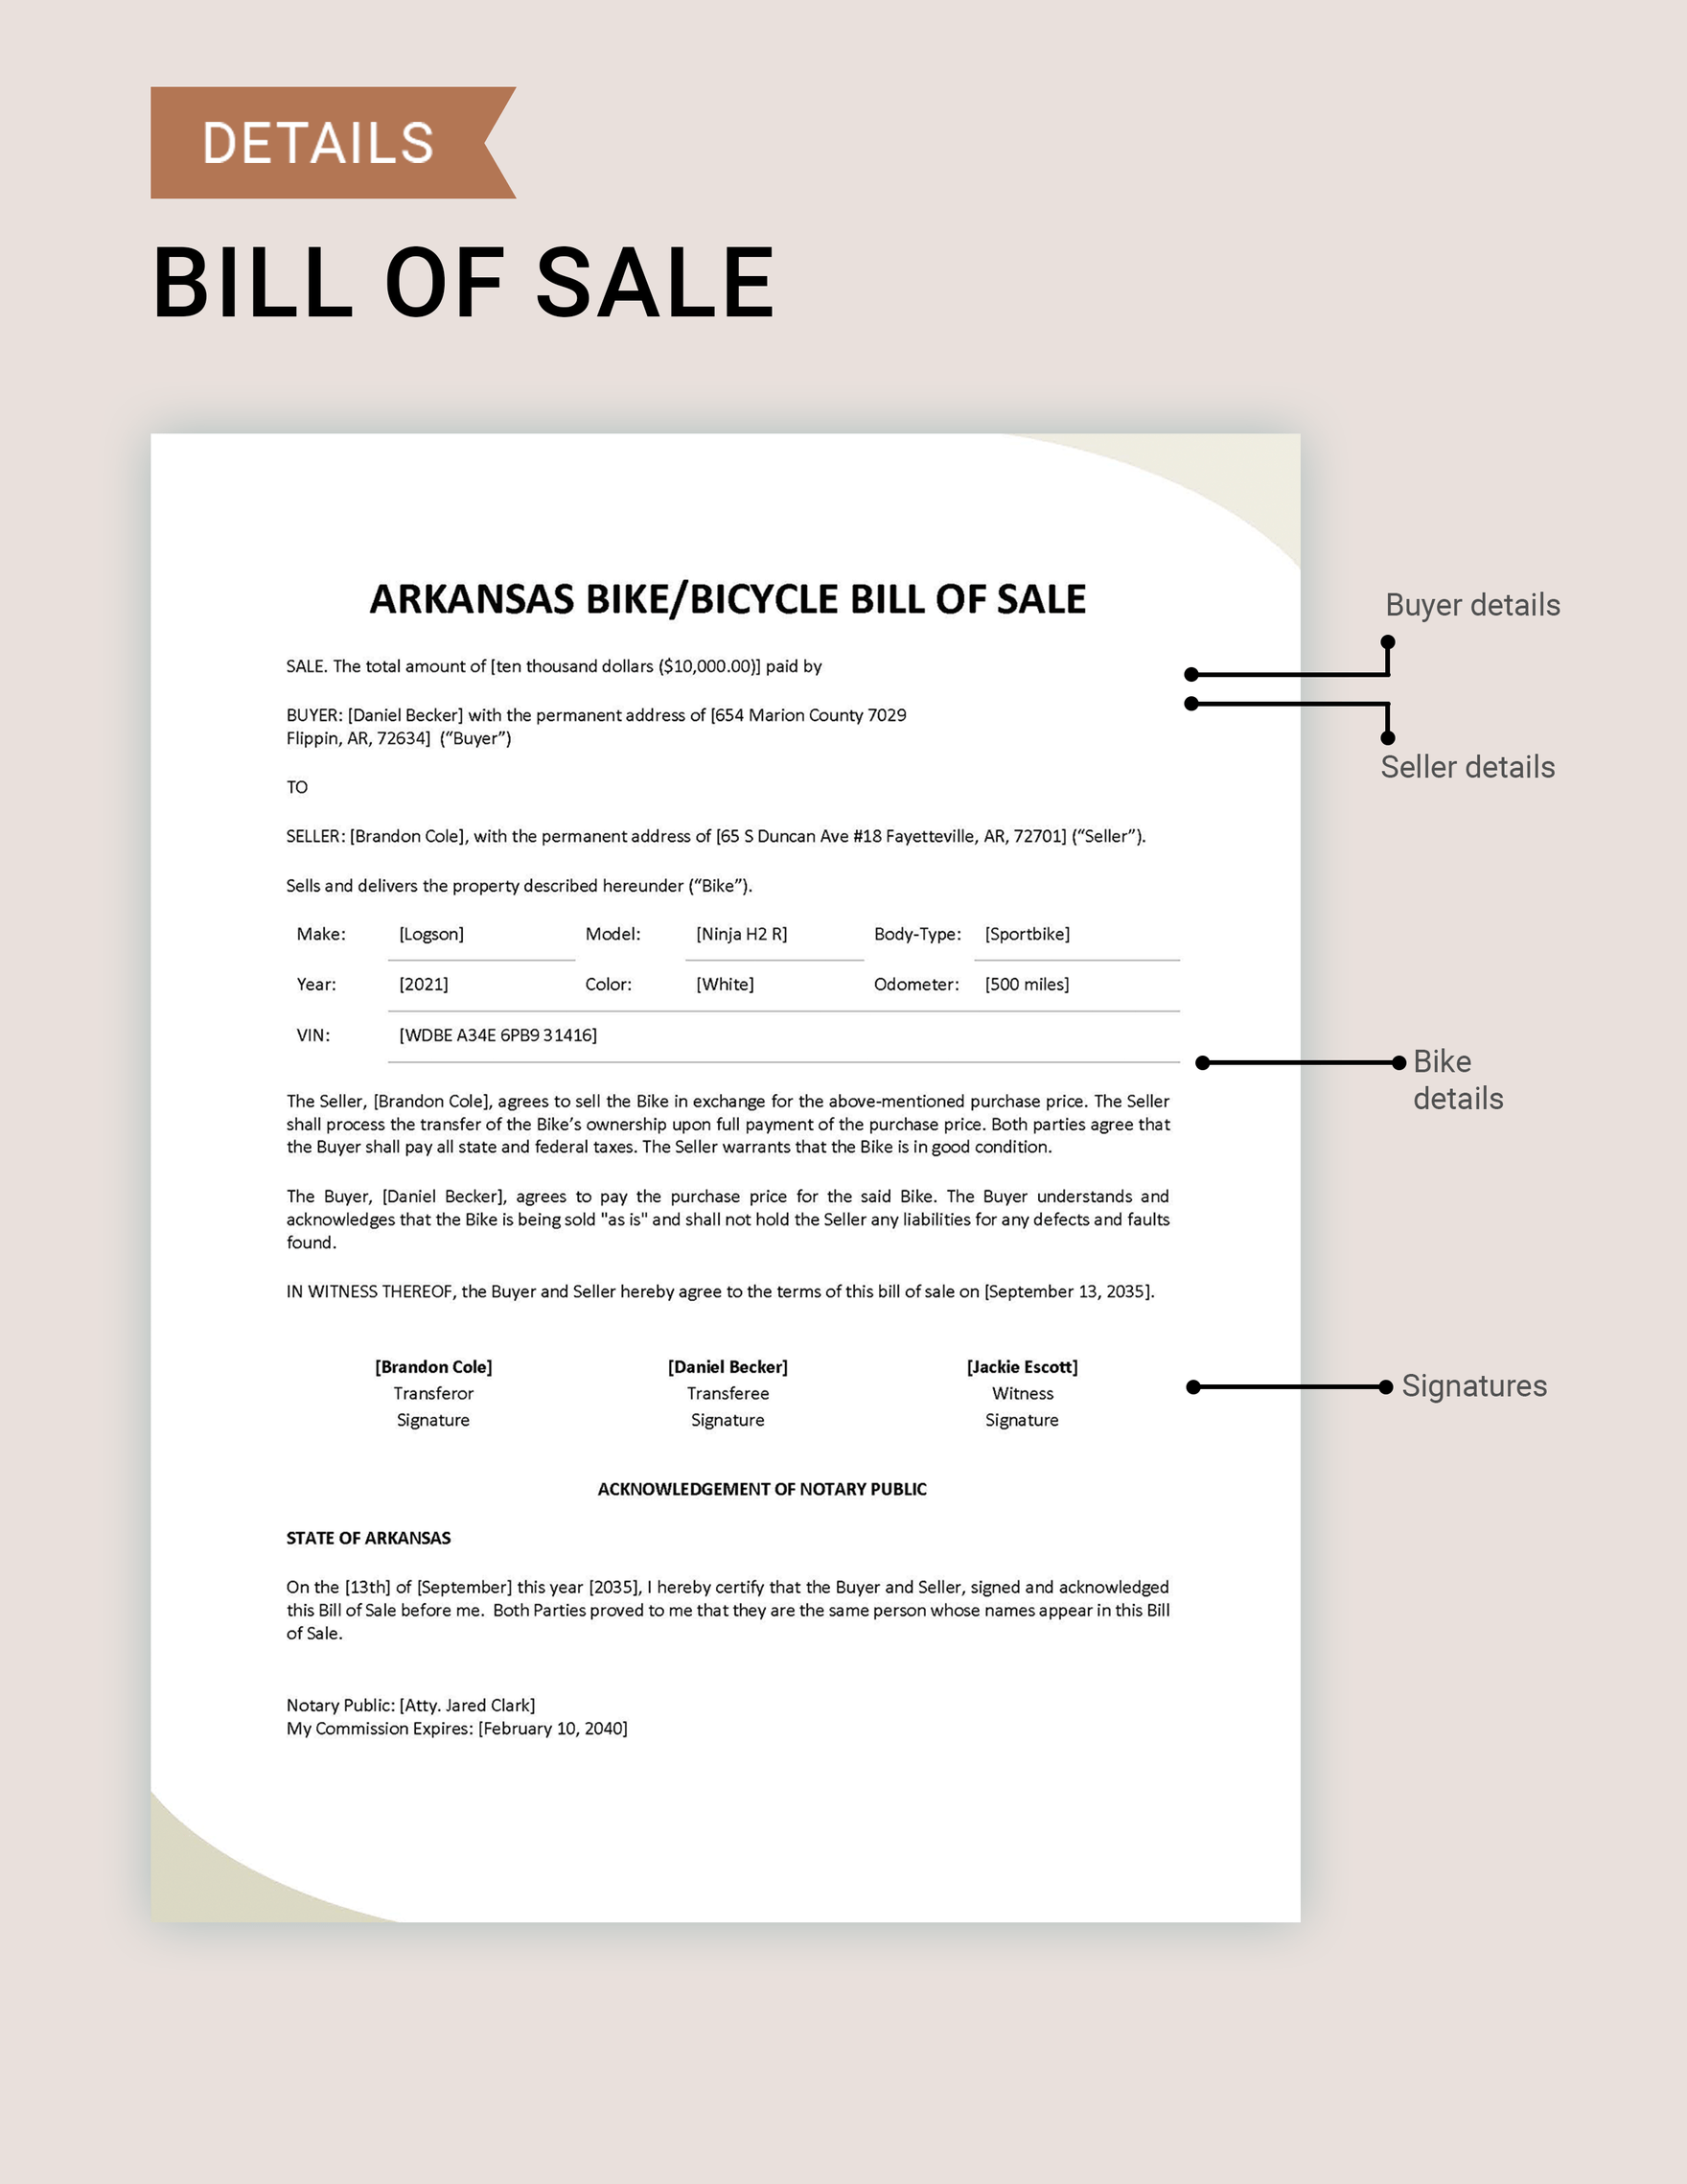 Arkansas Bike/ Bicycle Bill of Sale Template